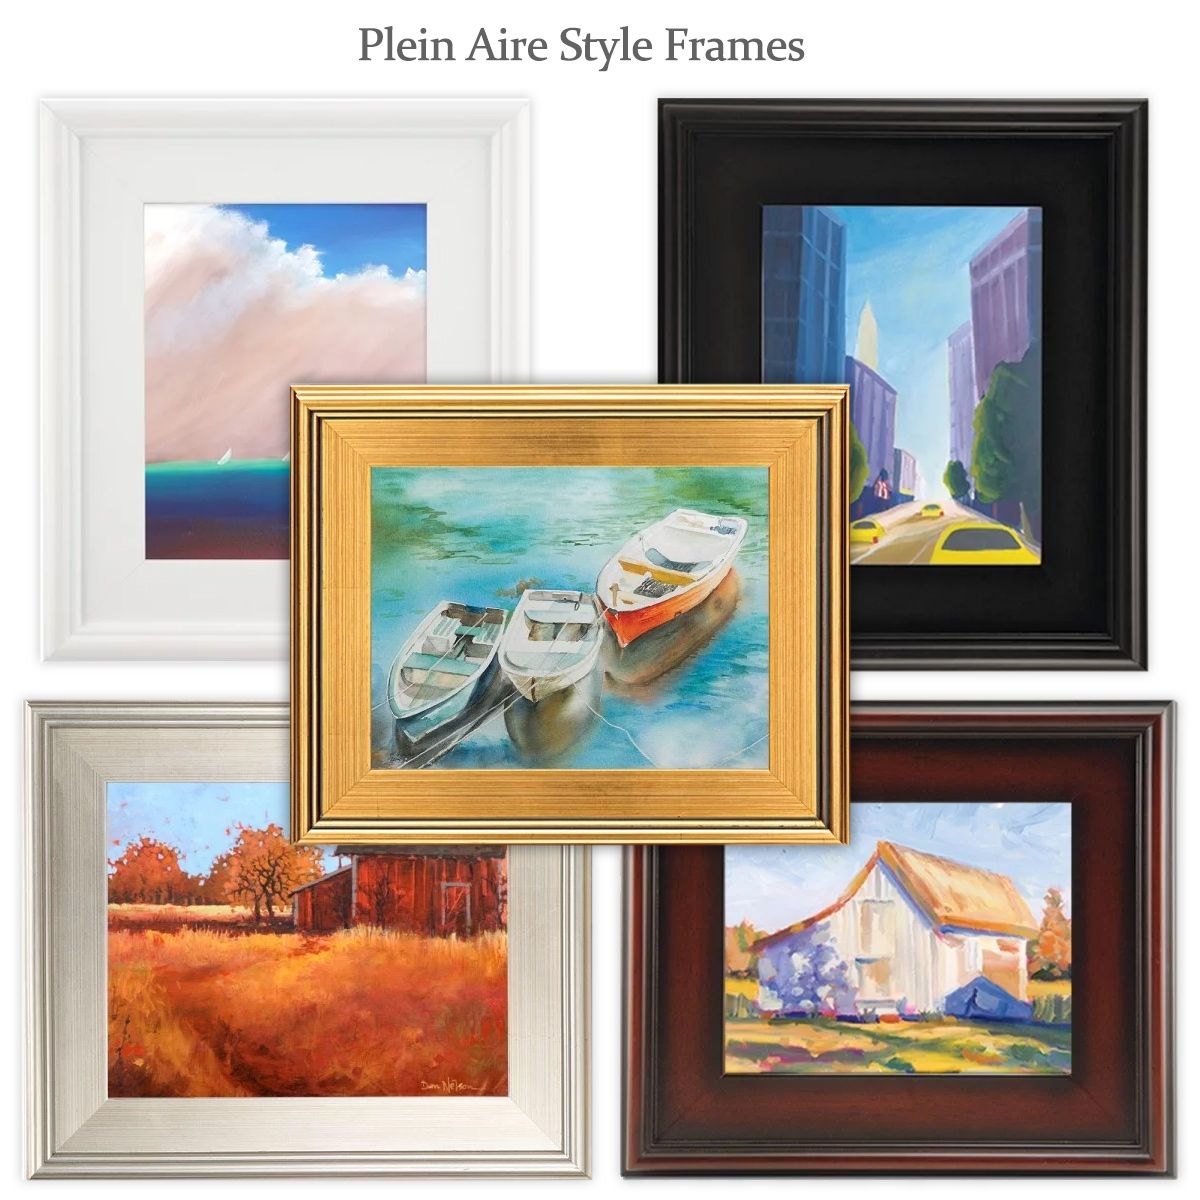 Plein Aire Style Art Frames 